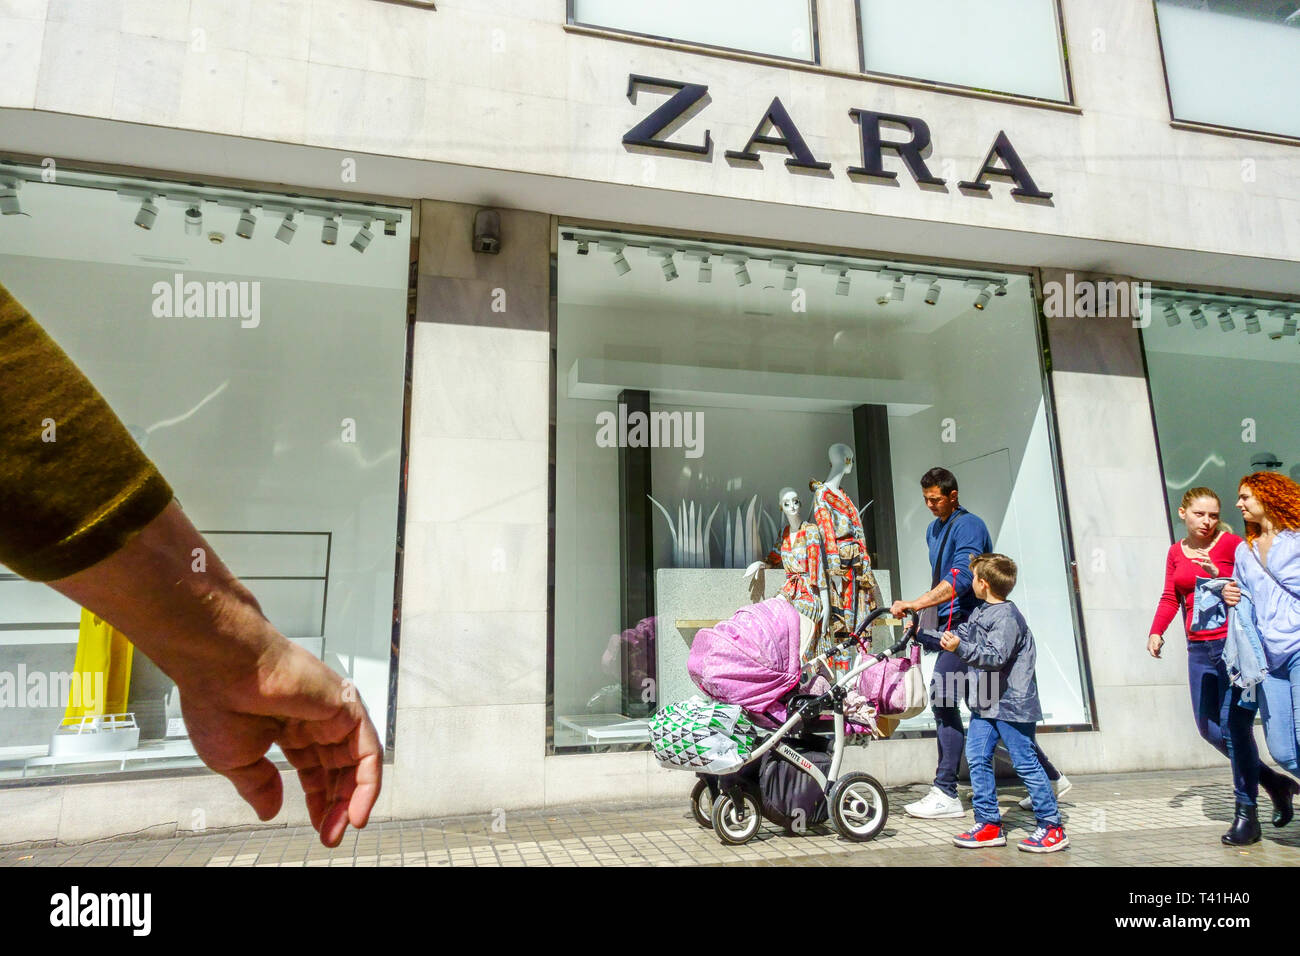 Valencia People shopping outside Zara store Spain Europe street